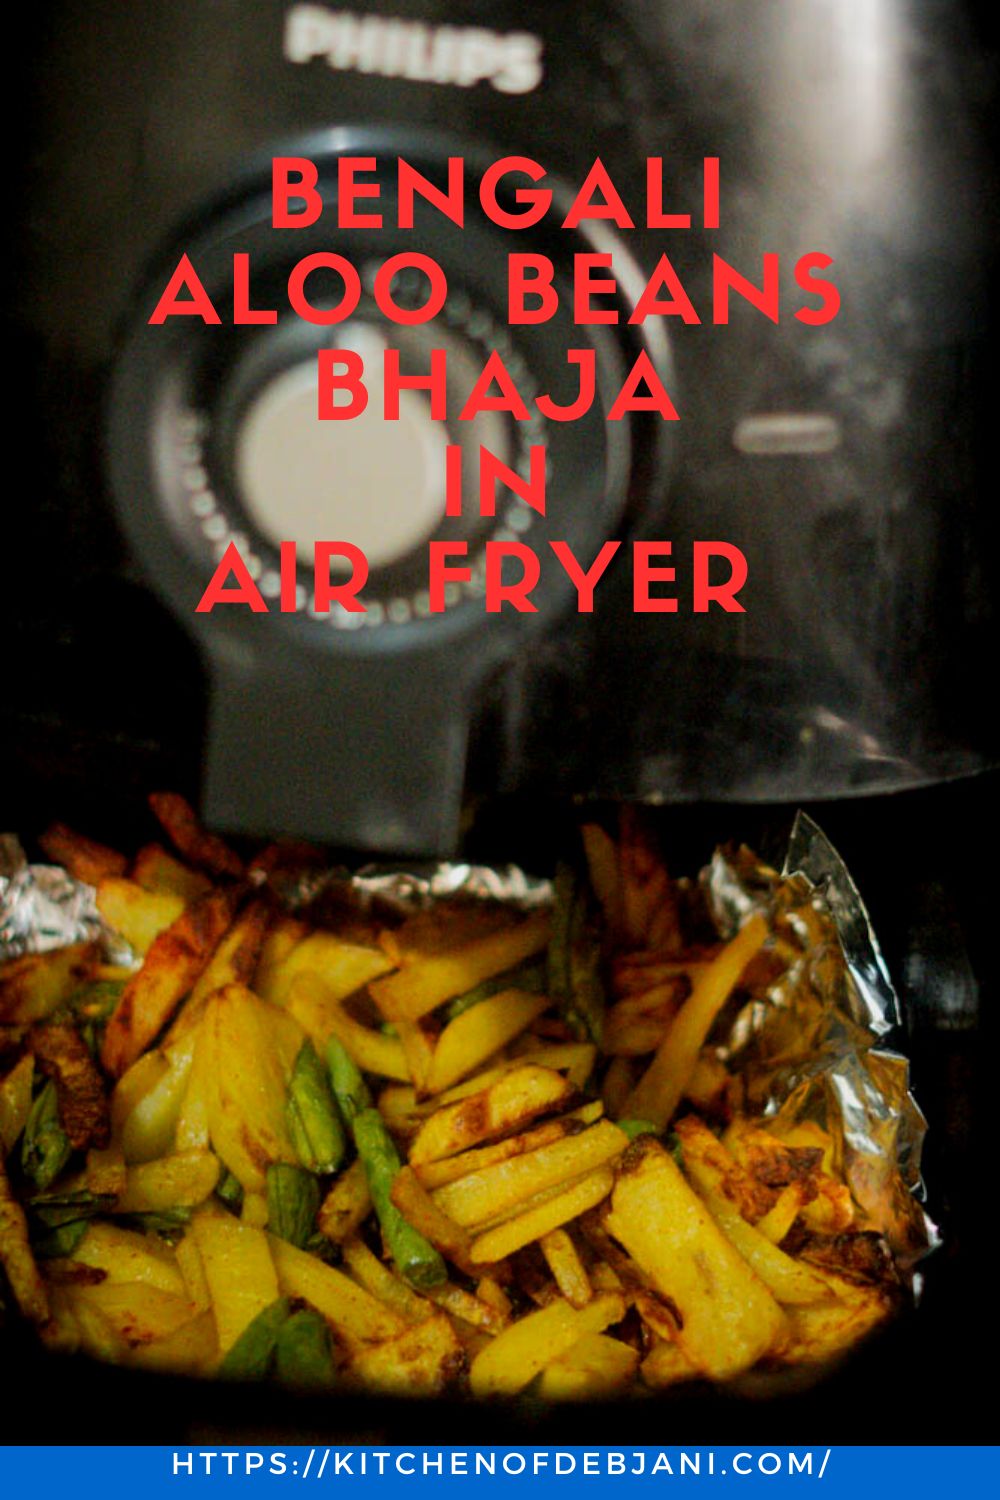 %Bengali Air fryer recipe aloo beans fry Food Pinterest Pin